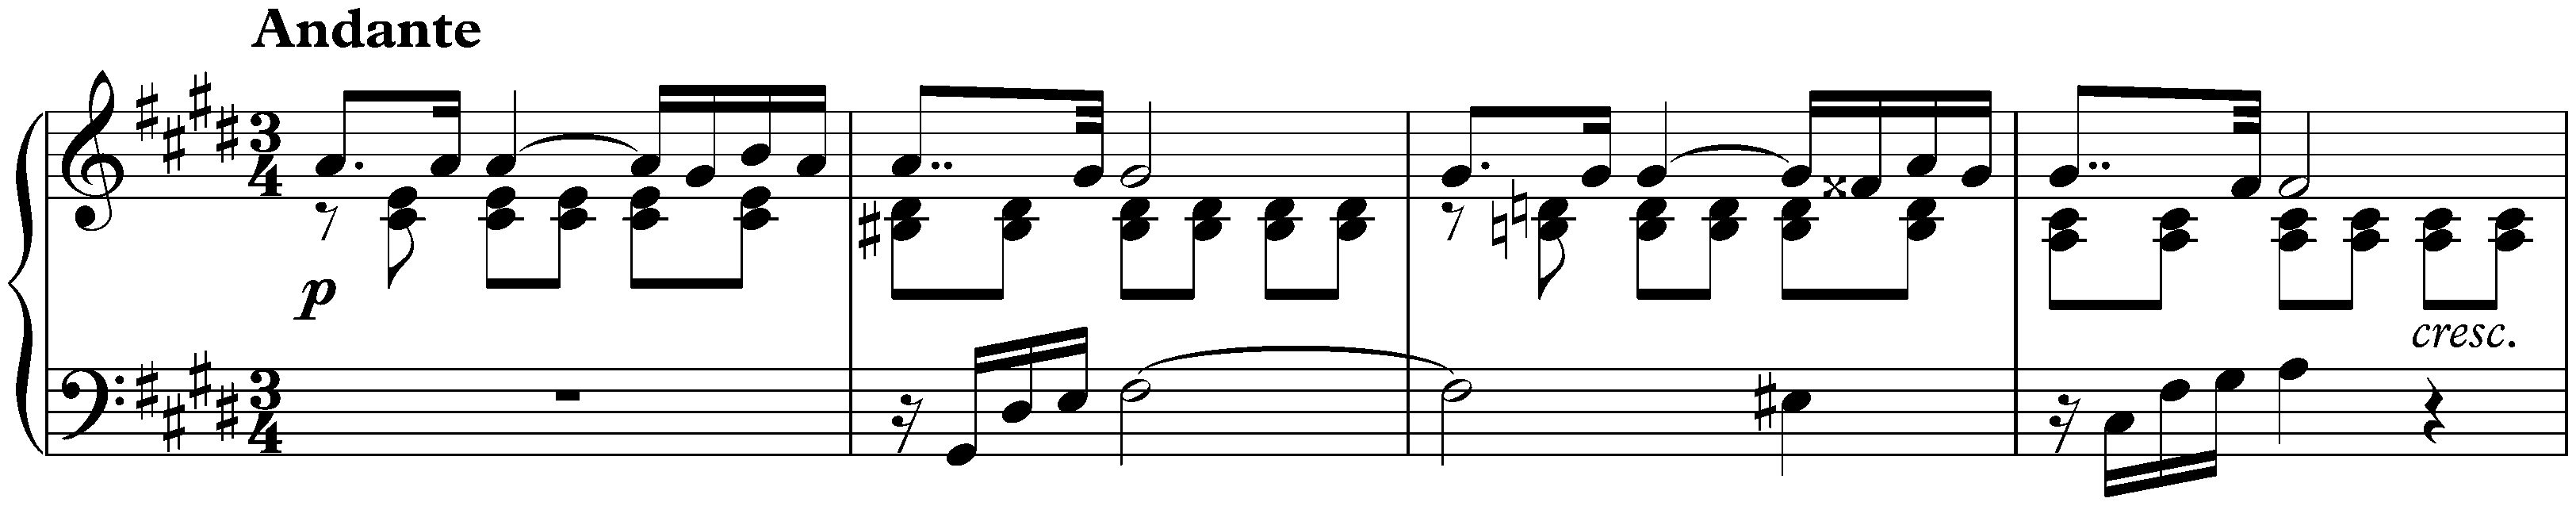 Prélude et nocturne, op. 9; 1. Prélude in C-sharp minor